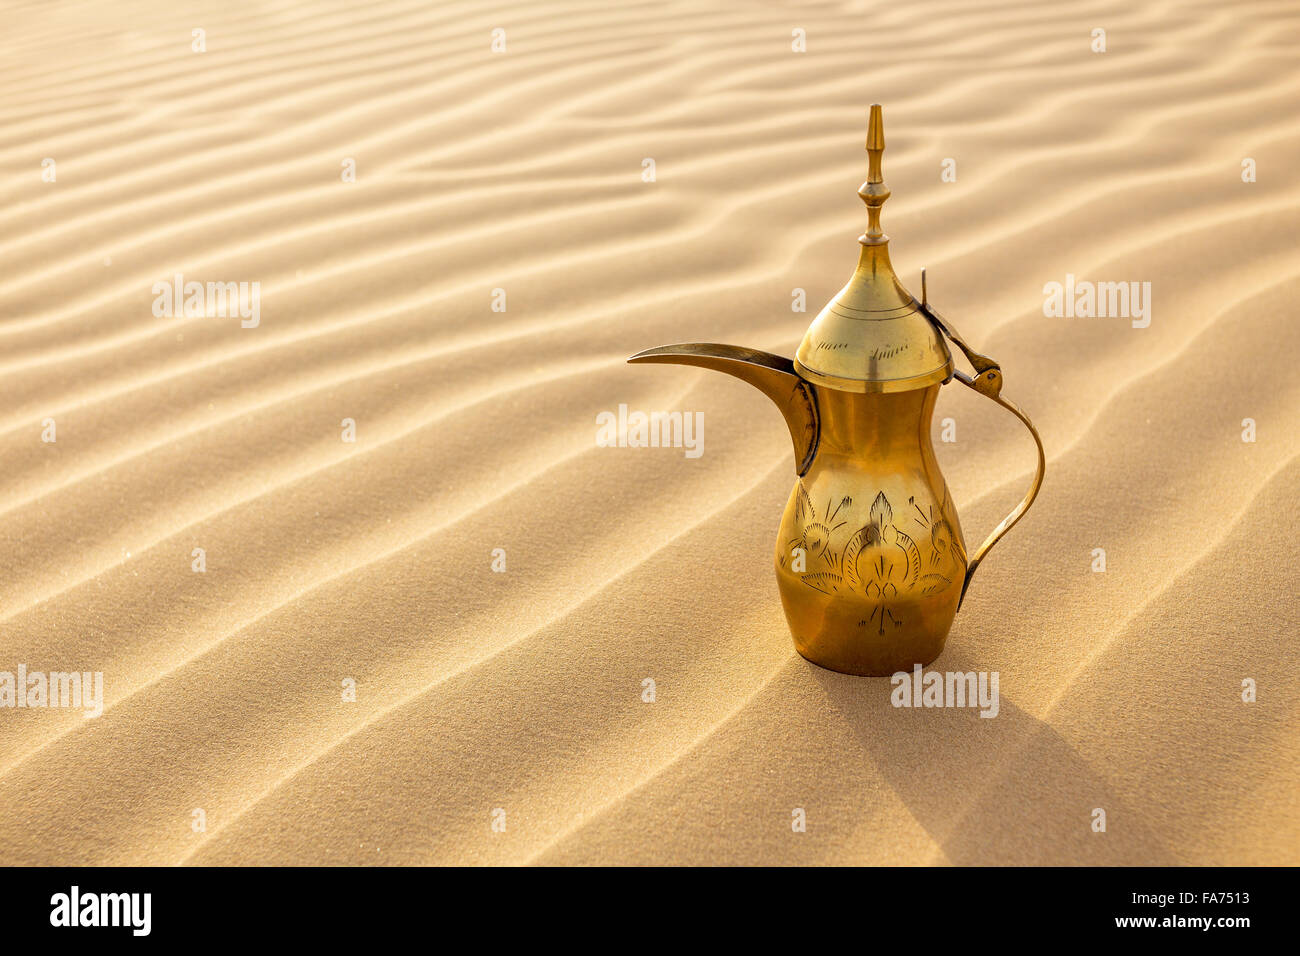 Dalla or Arabic Coffee pot on dessert sanddunes Stock Photo